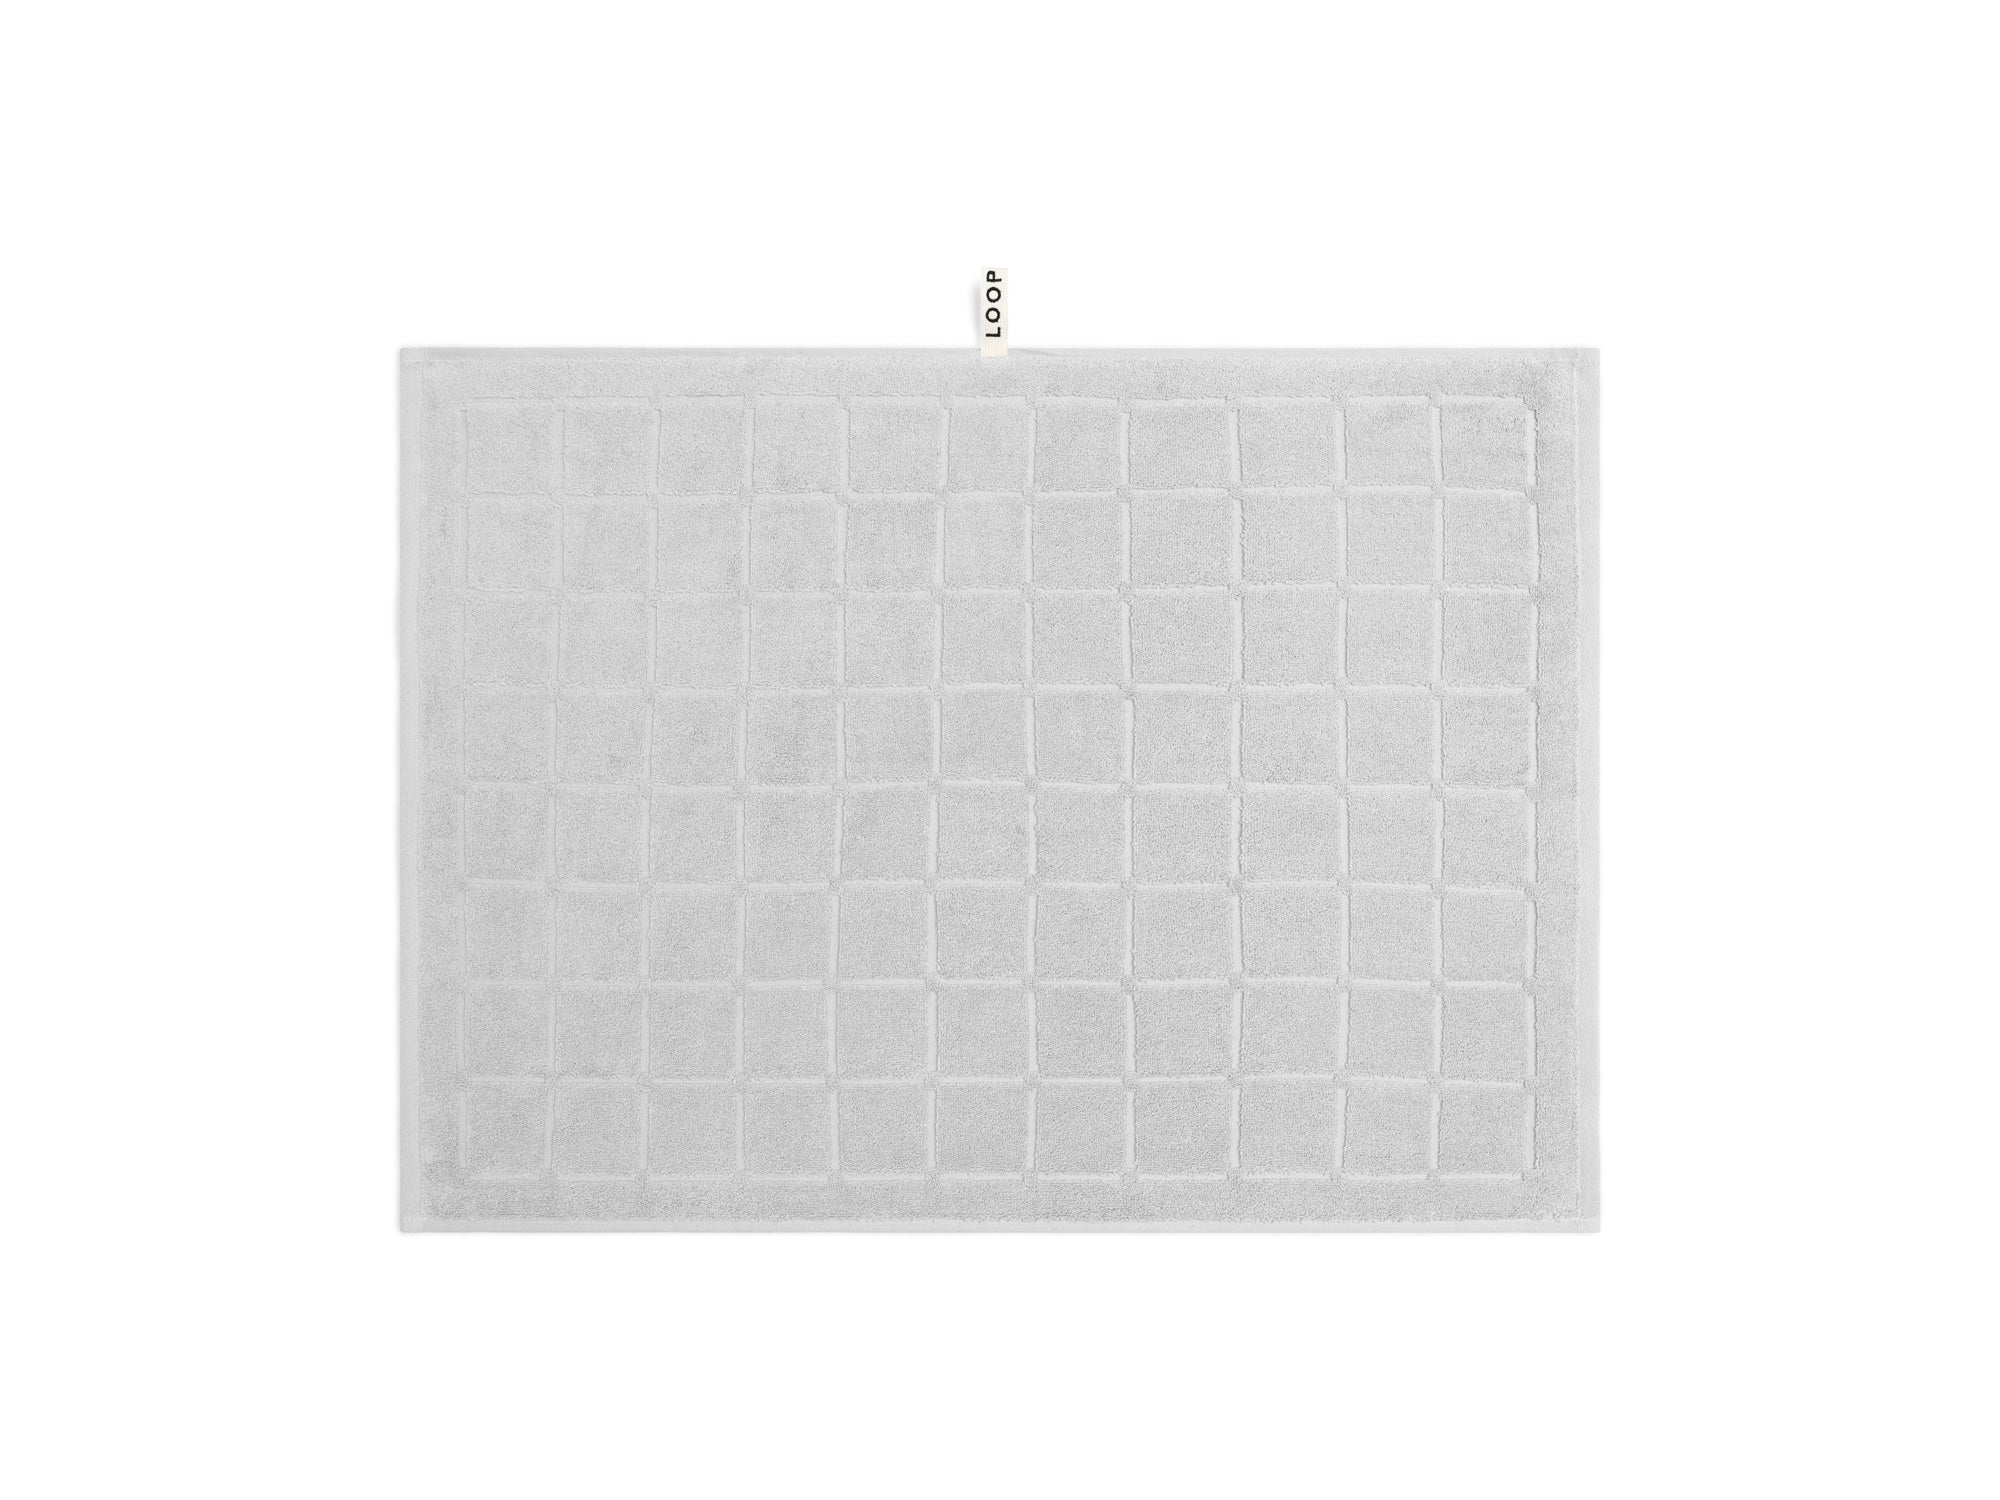 Bath Sheet Bundle - Terracotta/Stone - Tile